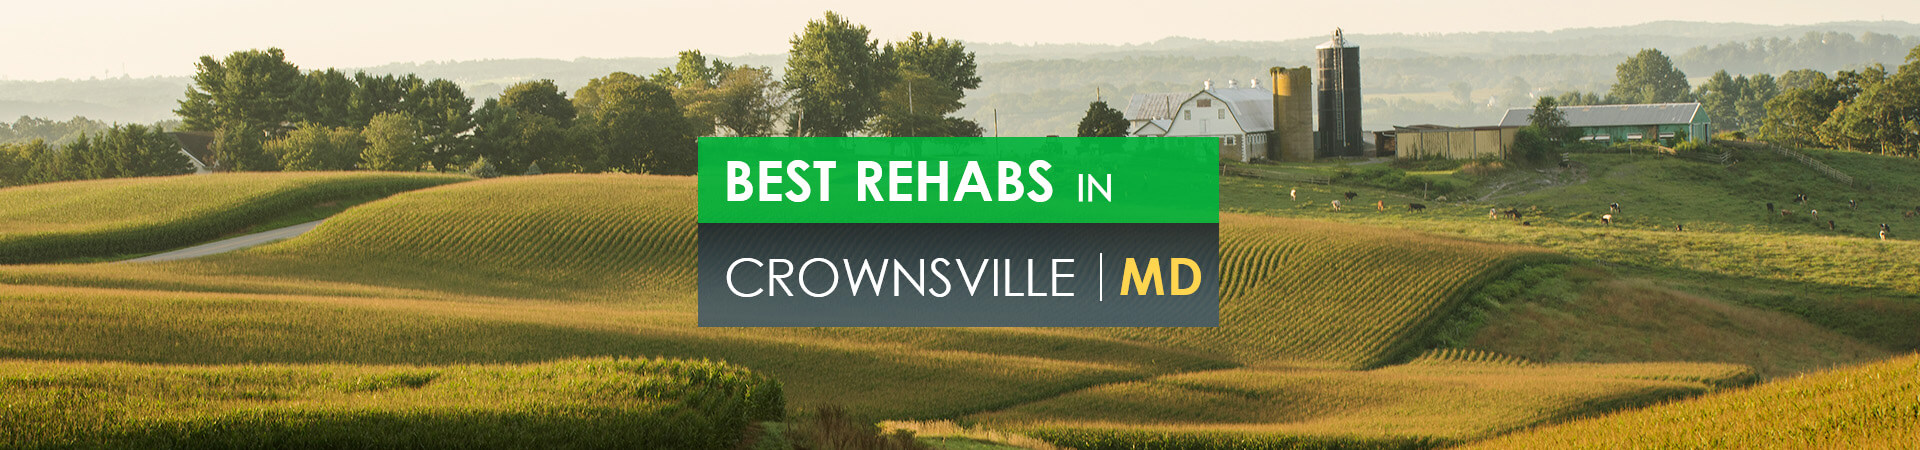 Best rehabs in Crownsville, MD